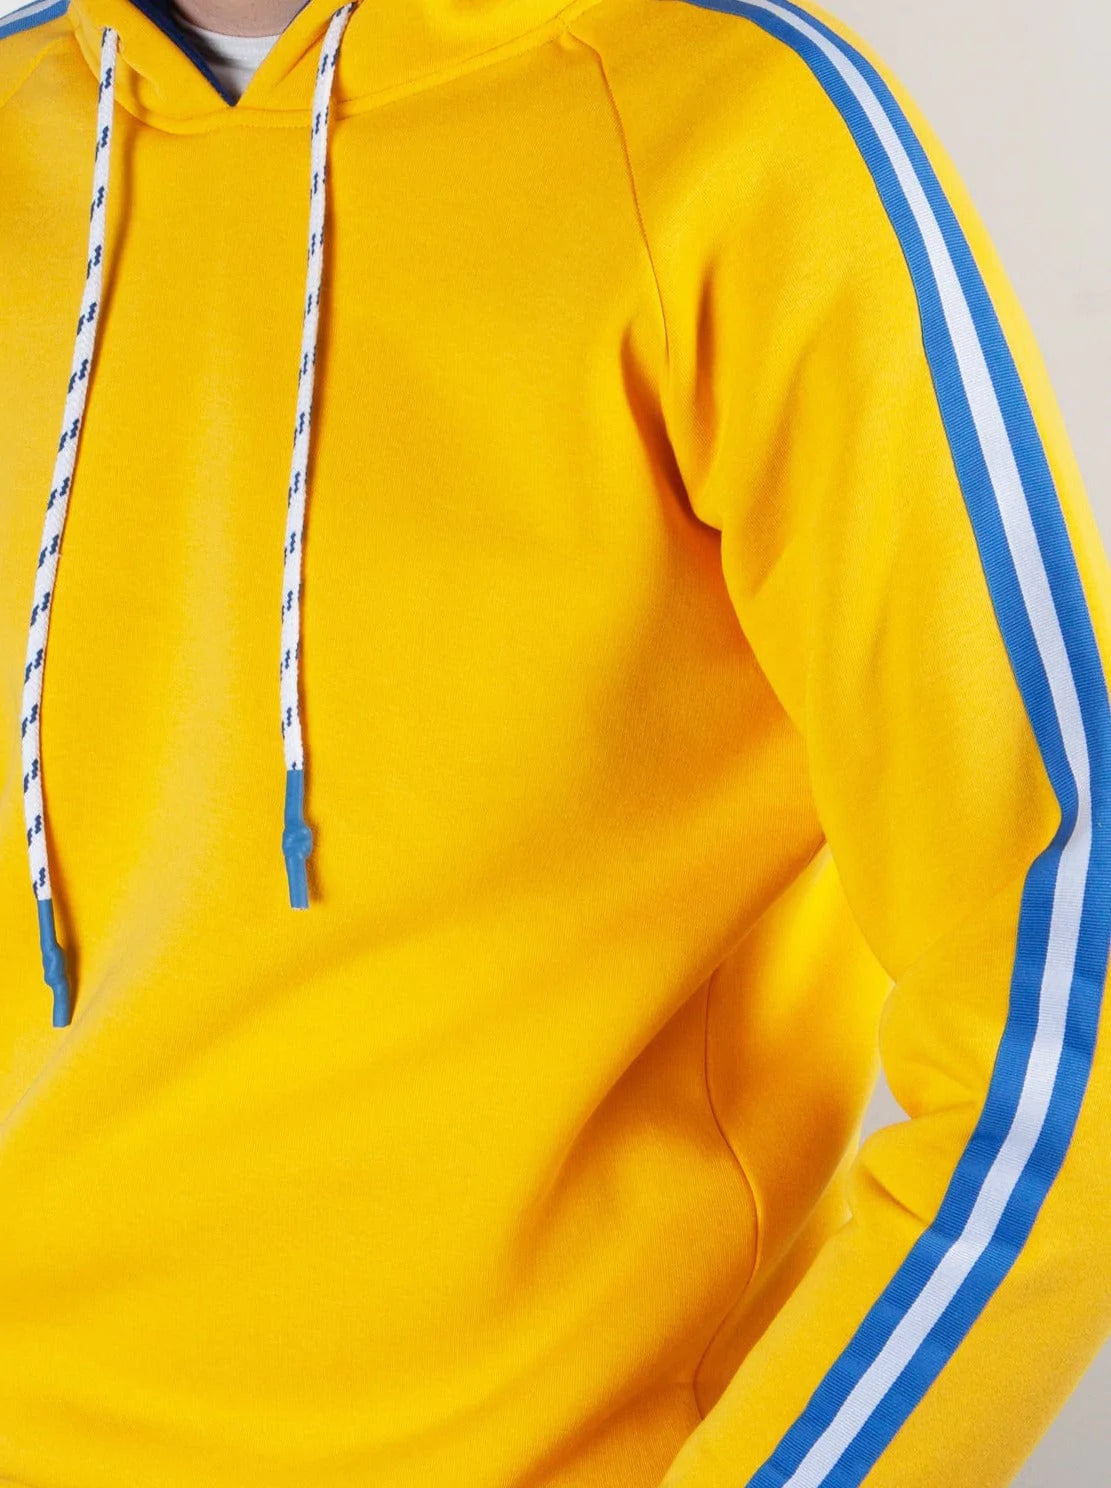 Top GunHoodie Sweatshirt "Logo Stripe" yellow